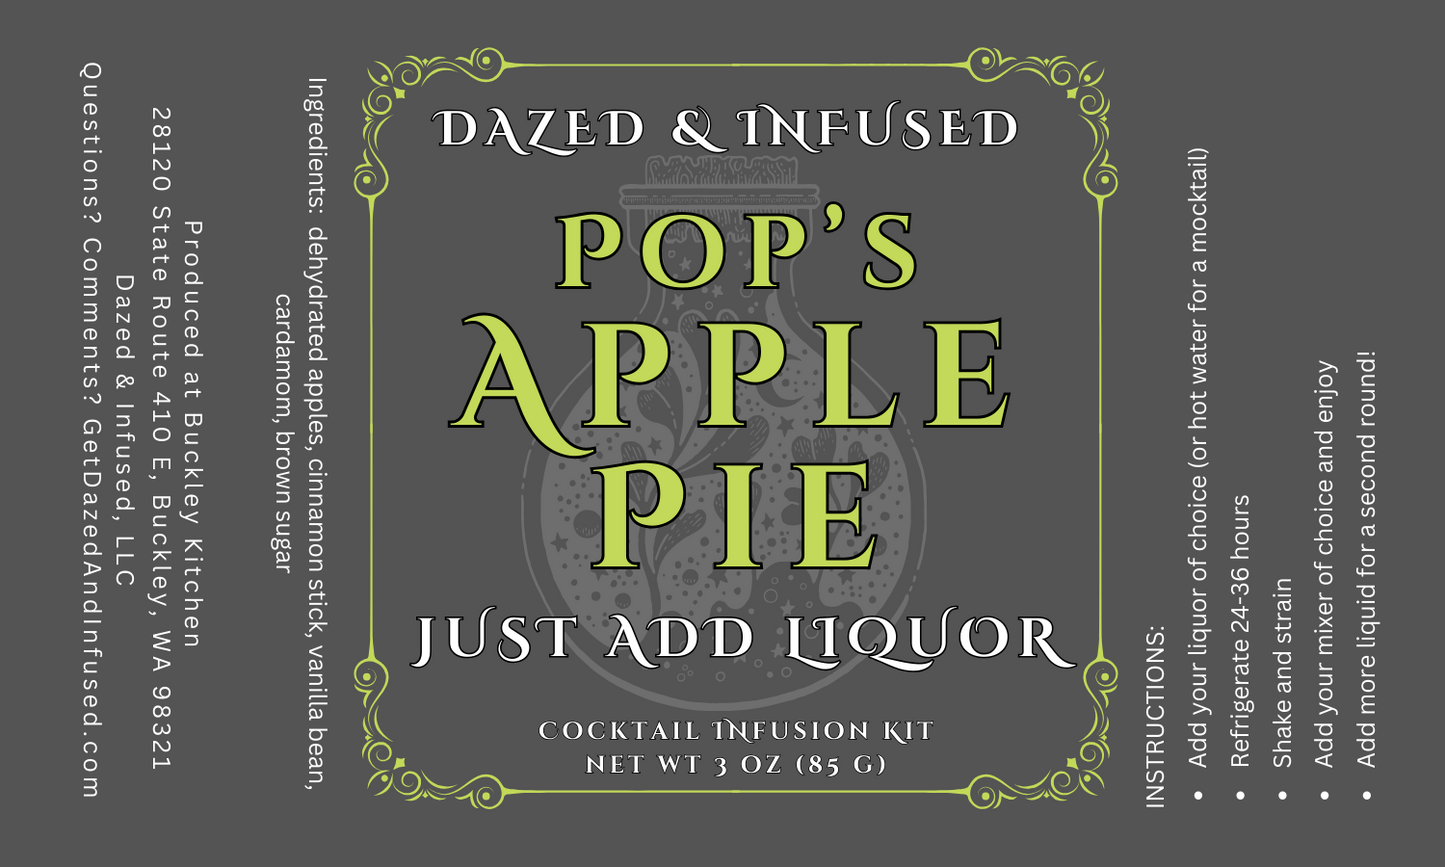 Pop's Apple Pie